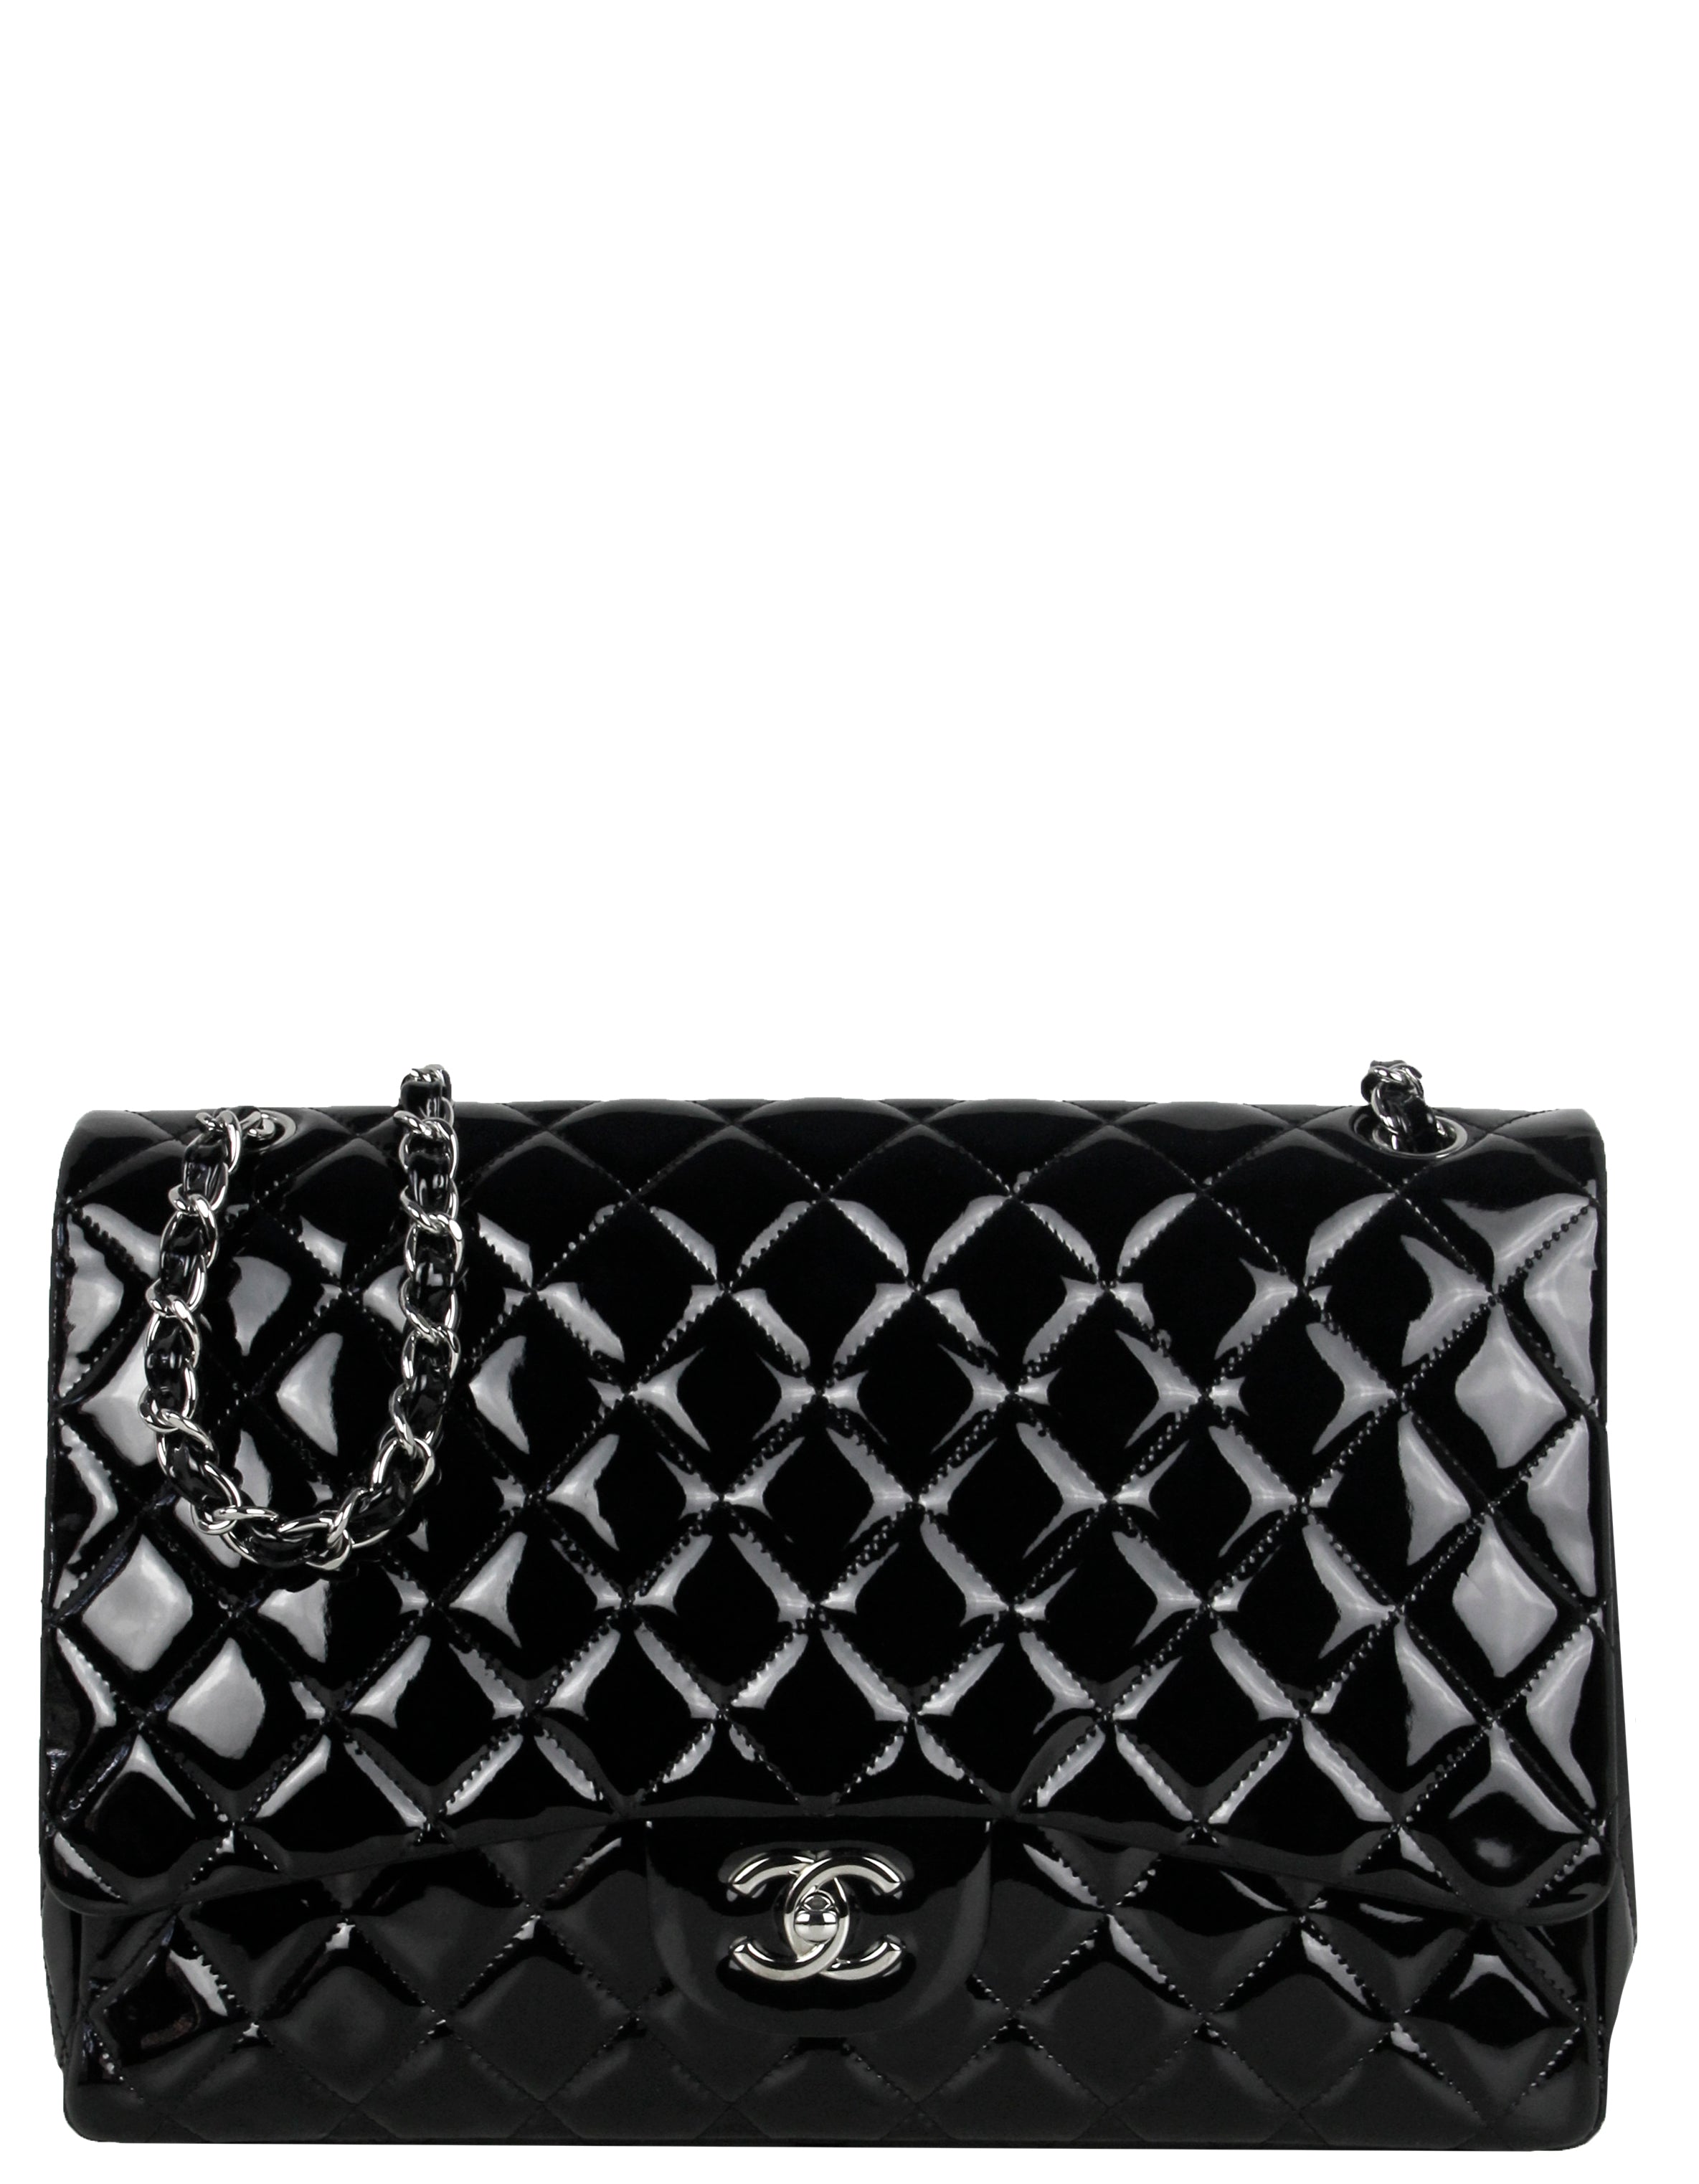 Chanel Black Patent Leather Single Flap Maxi Bag